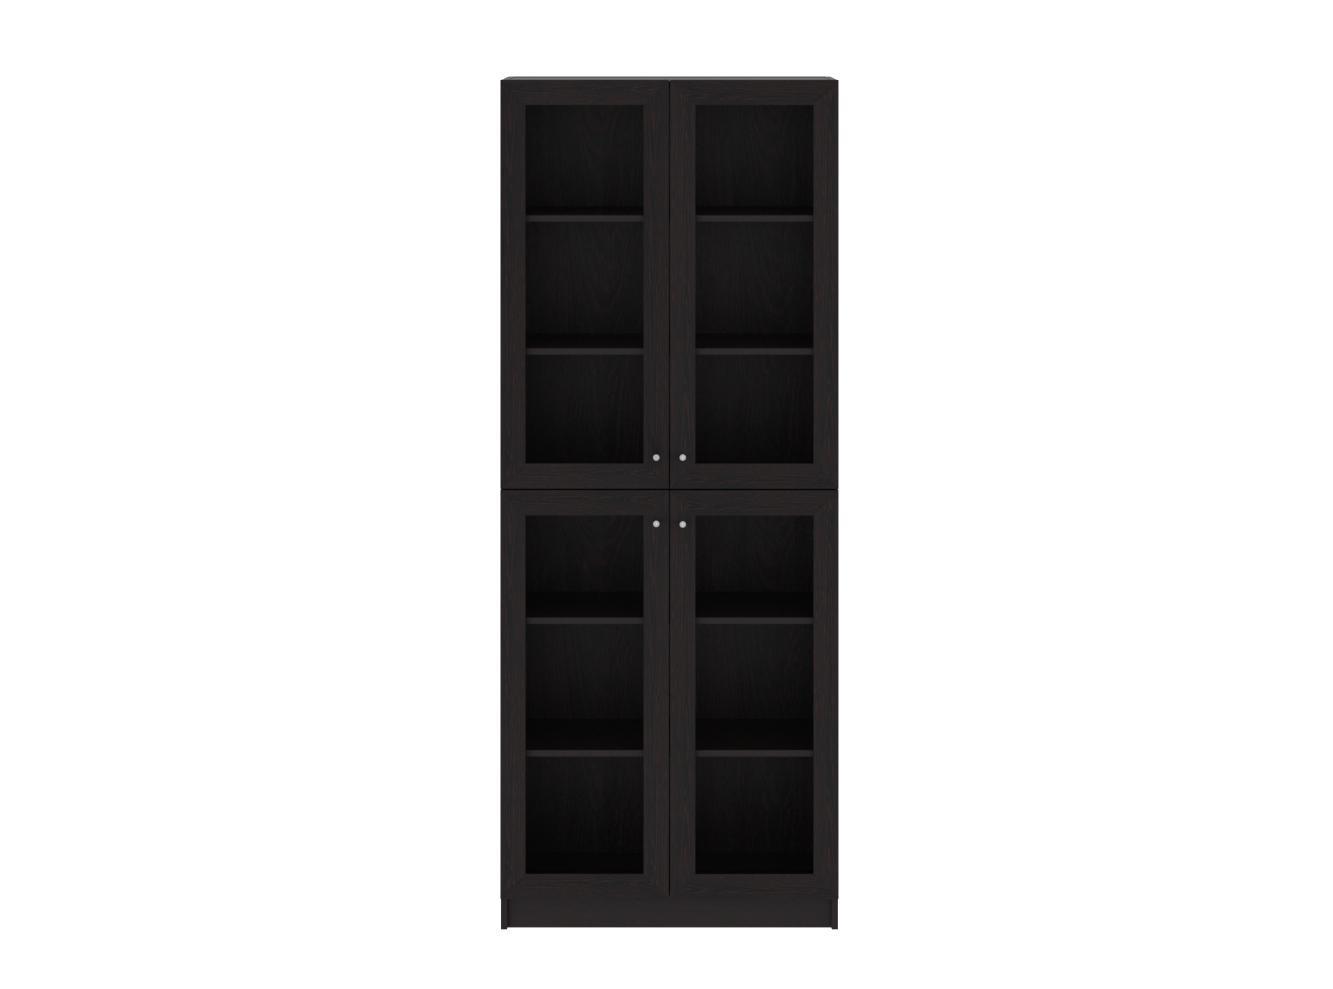 Книжный шкаф Билли 335 wenge tsava ИКЕА (IKEA) изображение товара